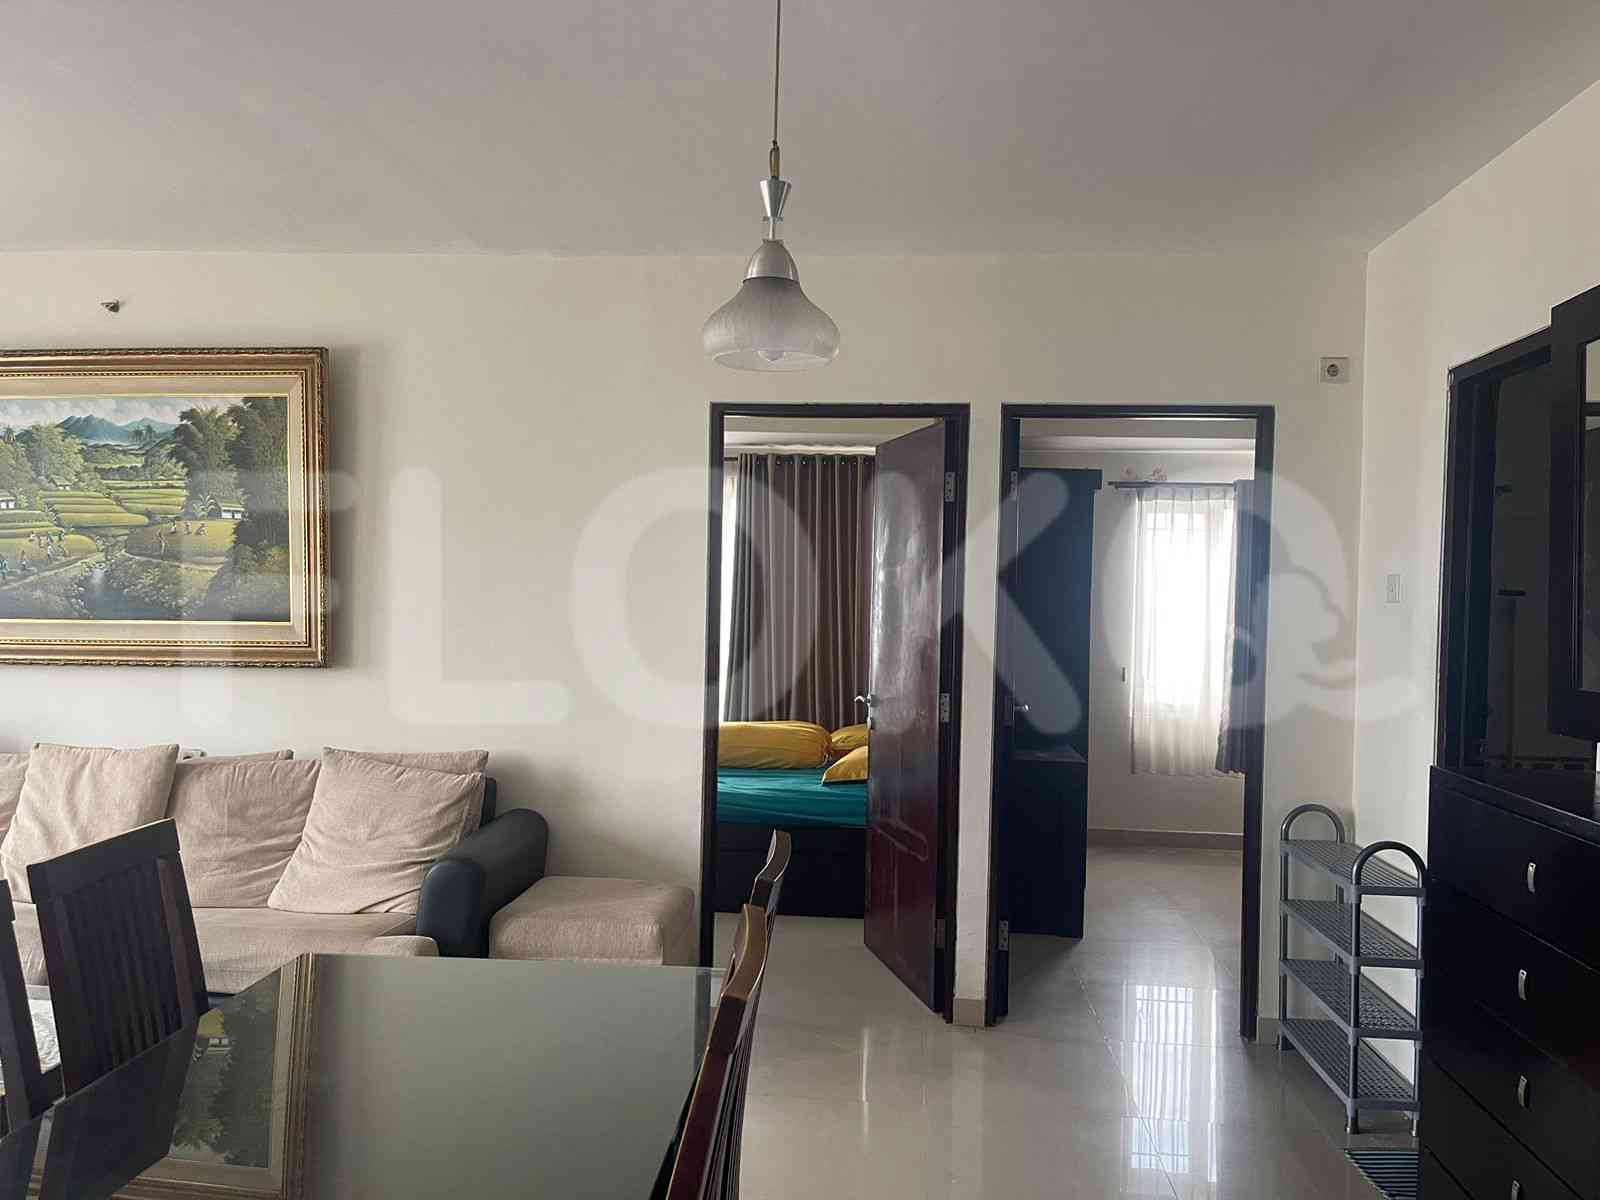 64 sqm, 21st floor, 2 BR apartment for sale in Kuningan 6